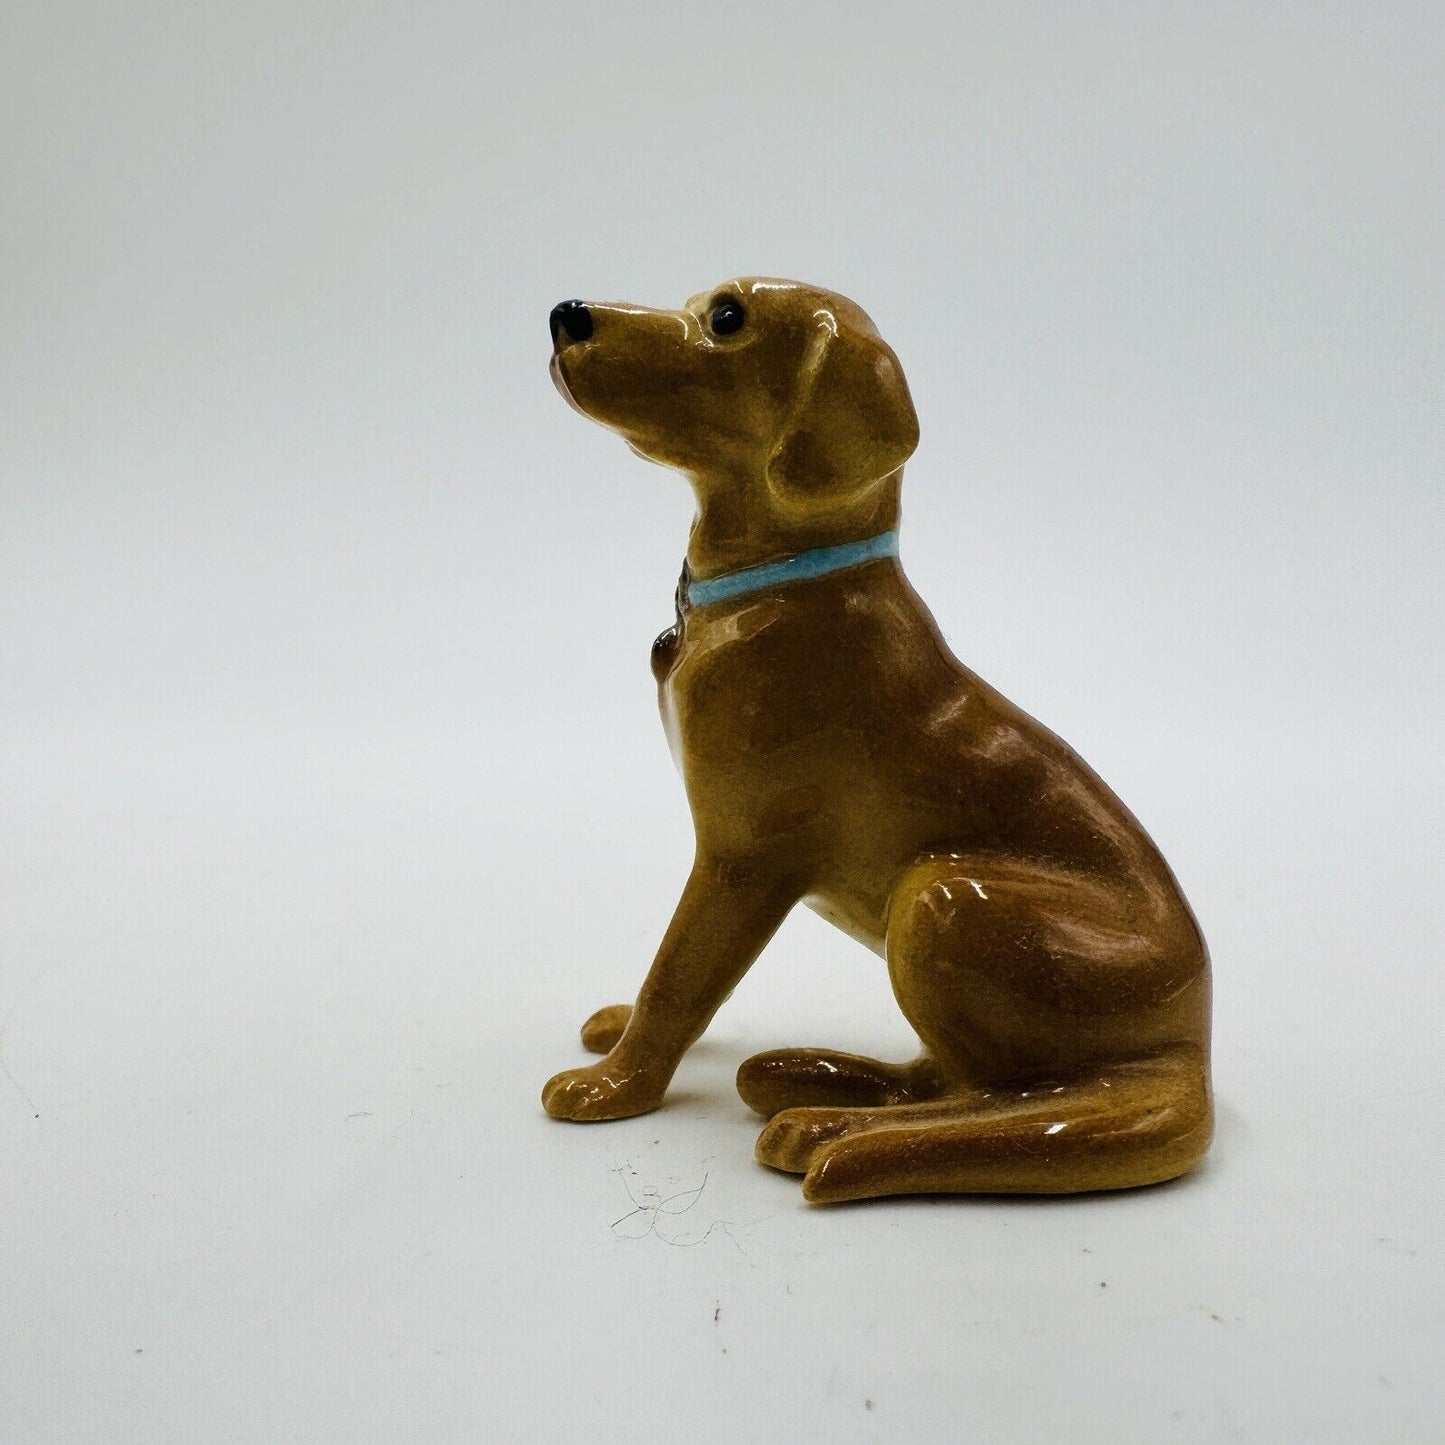 Hagen Renaker Labrador Retriever Dog Sitting Miniature Porcelain Figurine